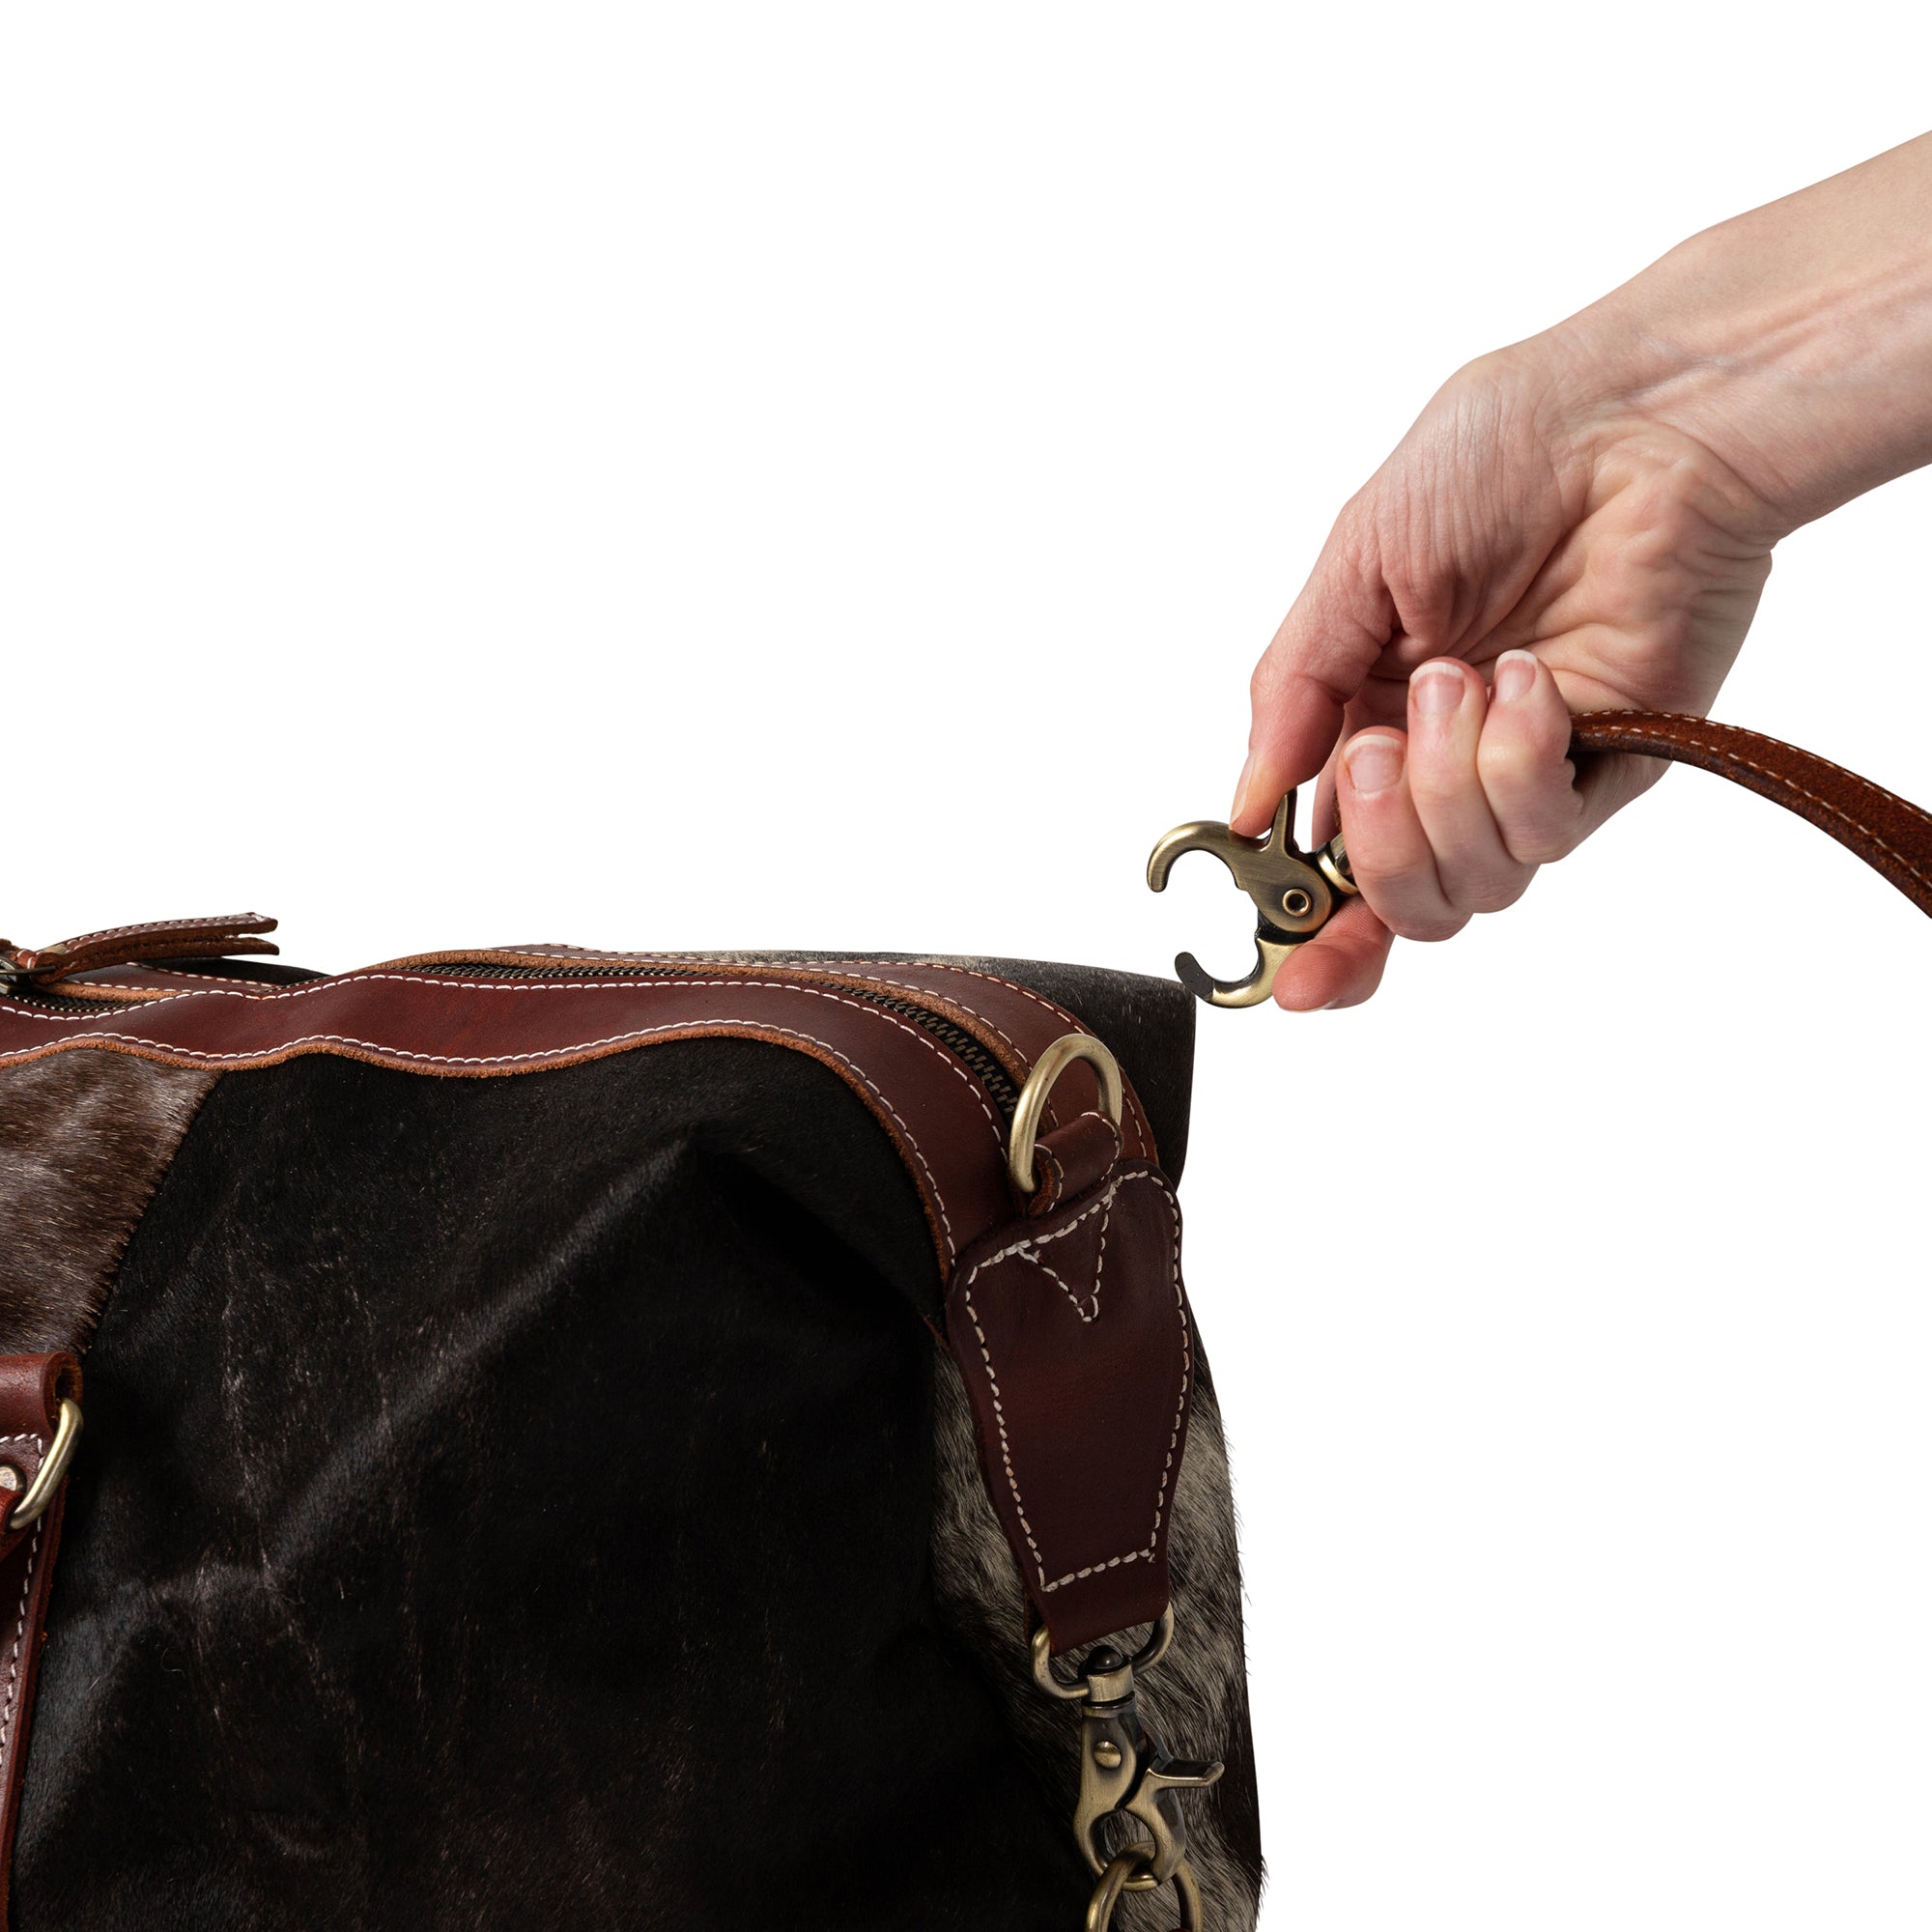 Huntley Equestrian Leopard Hair on Hide Tote Handbag